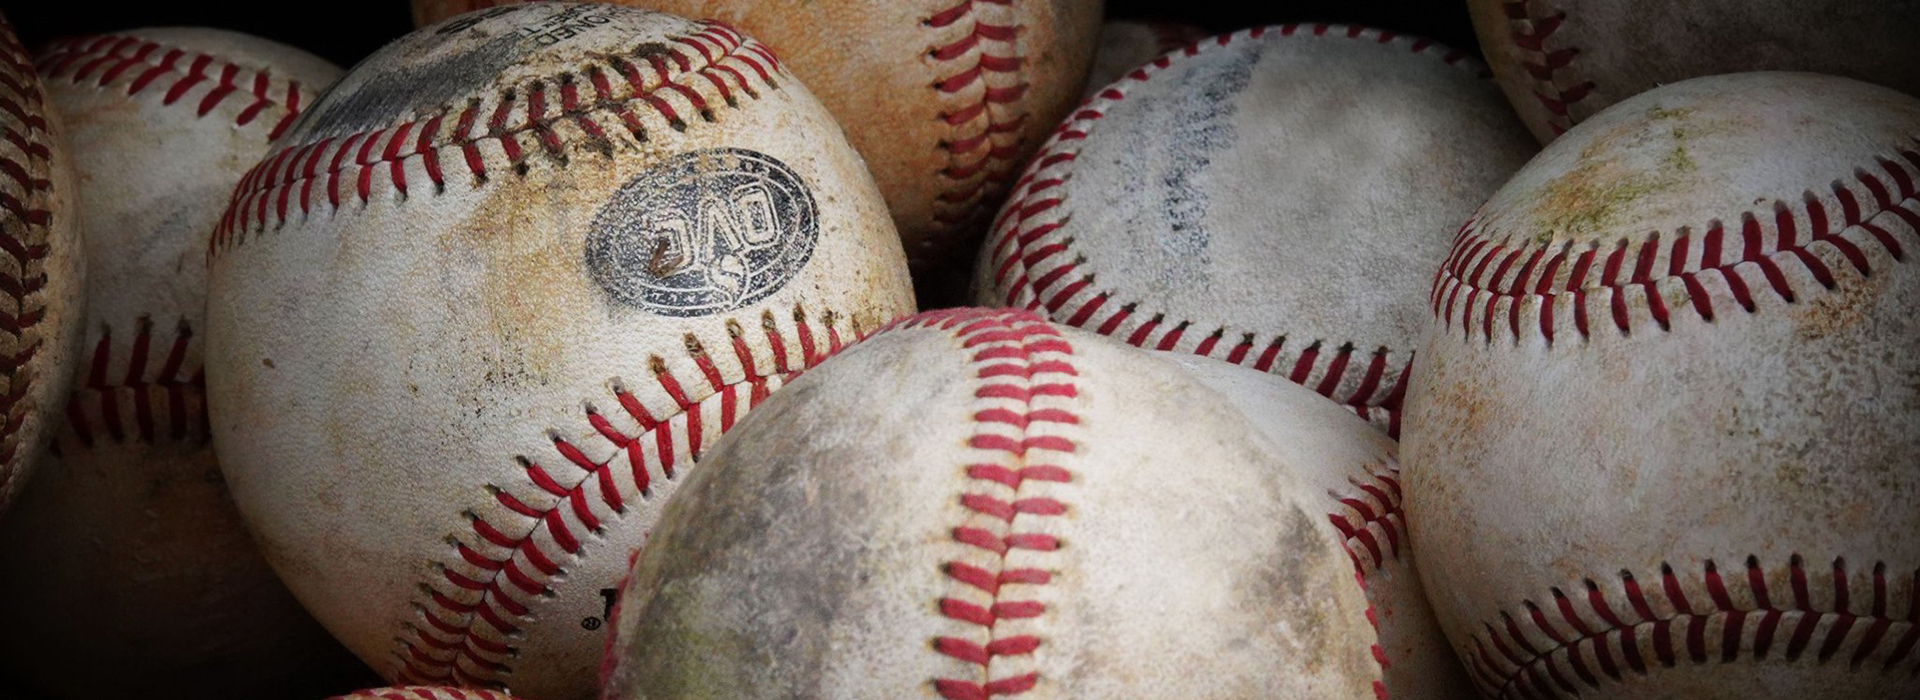 Tech baseball team moves Sunday contest, to play doubleheader vs. EIU Saturday